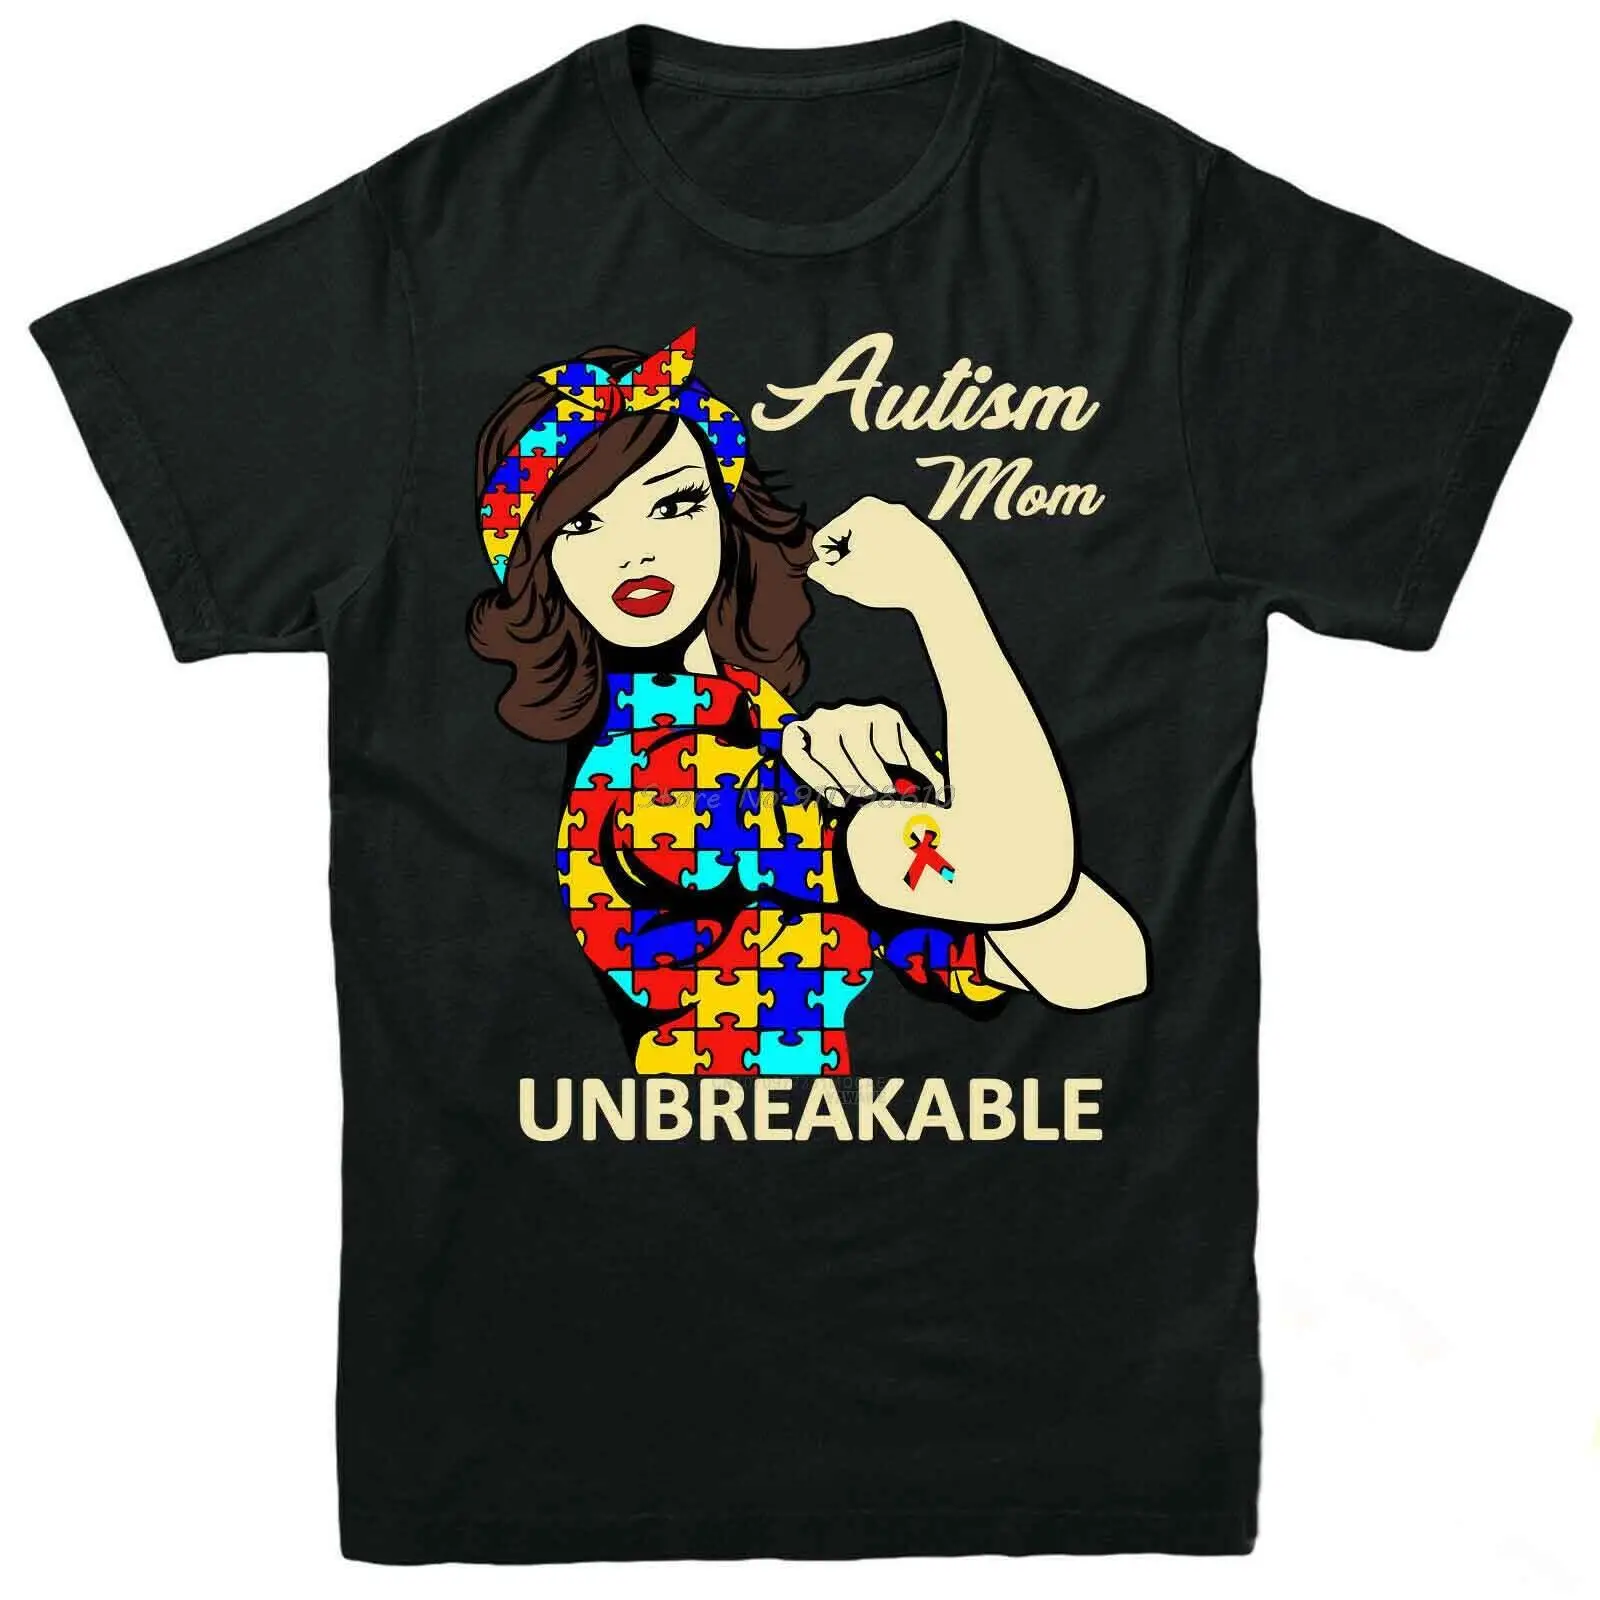 

Fighter Autism T-Shirt Love Heart Mom Unbreakable Awareness Fashion Short Sleeve Black T Shirt Cotton Casual Tee Shirt